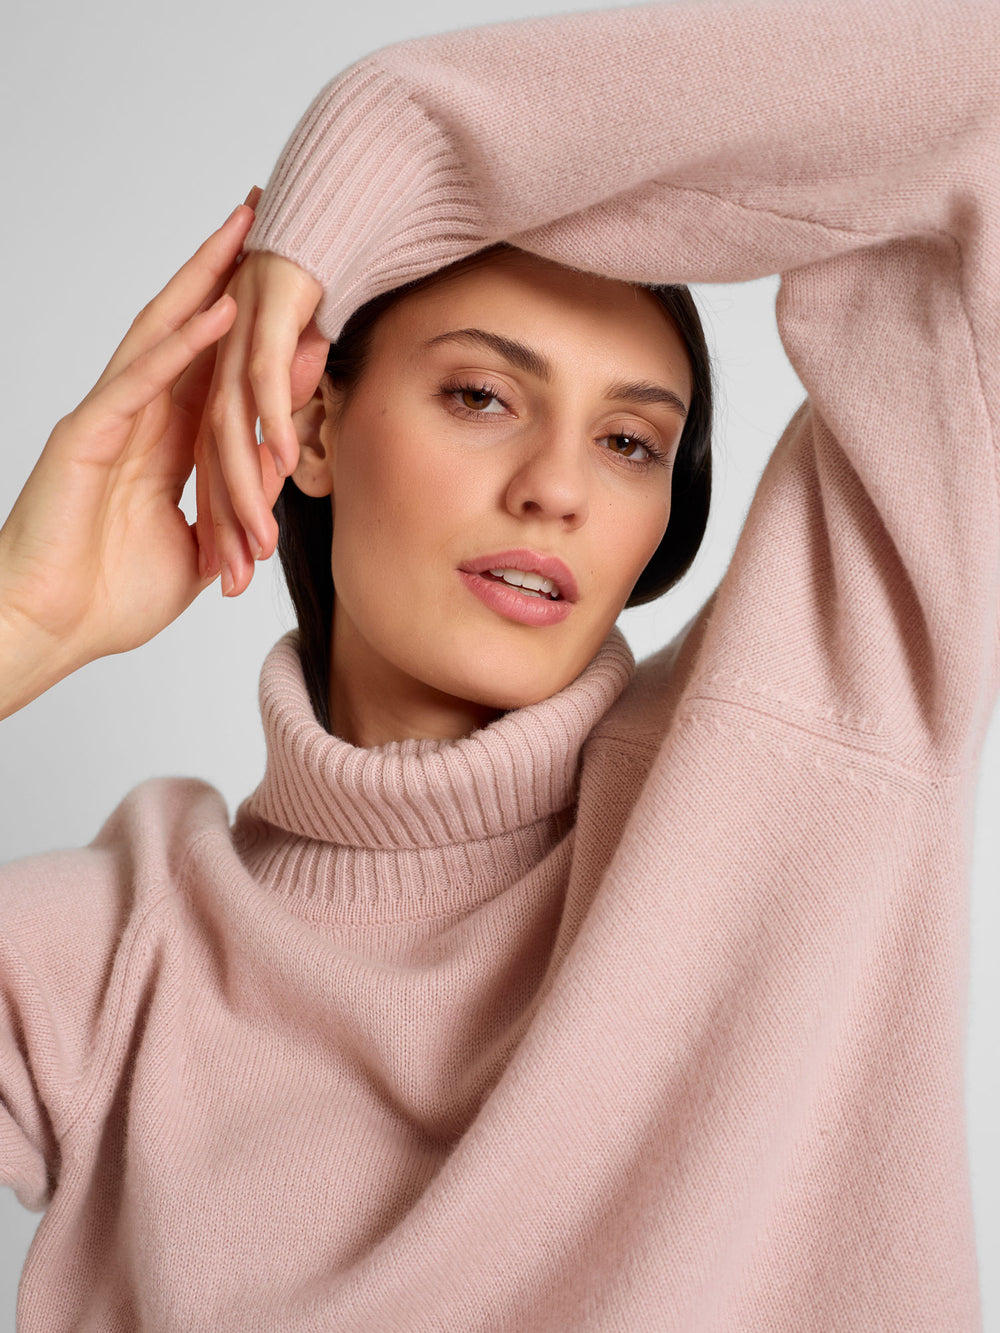 kashmina turtle neck cashmere sweater milano , color rose glow, cashmere wool Scandinavian design sustainable fashion.